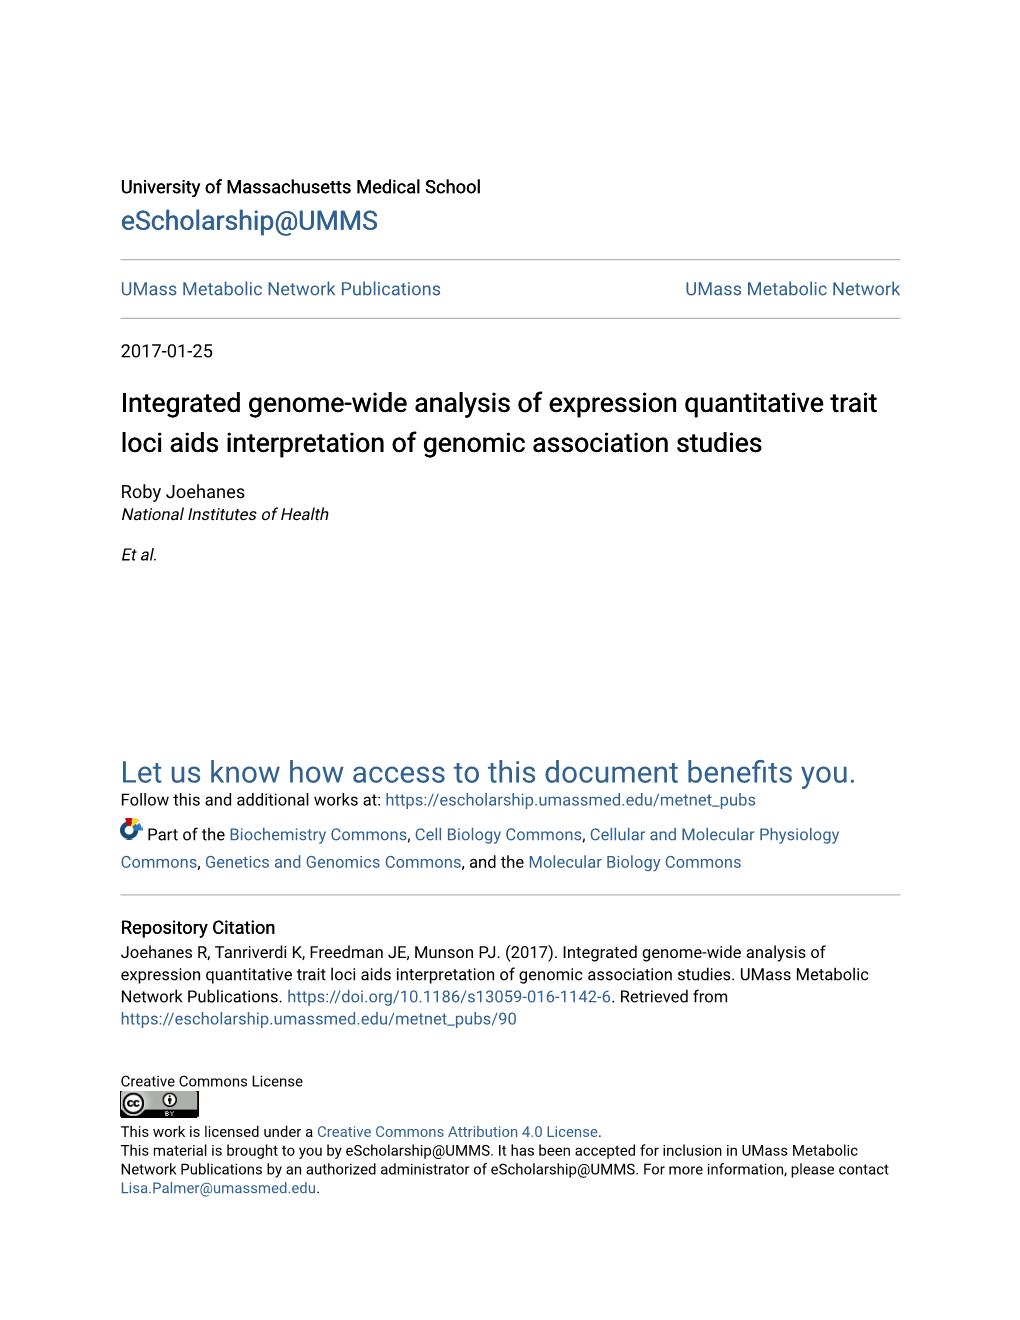 Integrated Genome-Wide Analysis of Expression Quantitative Trait Loci Aids Interpretation of Genomic Association Studies